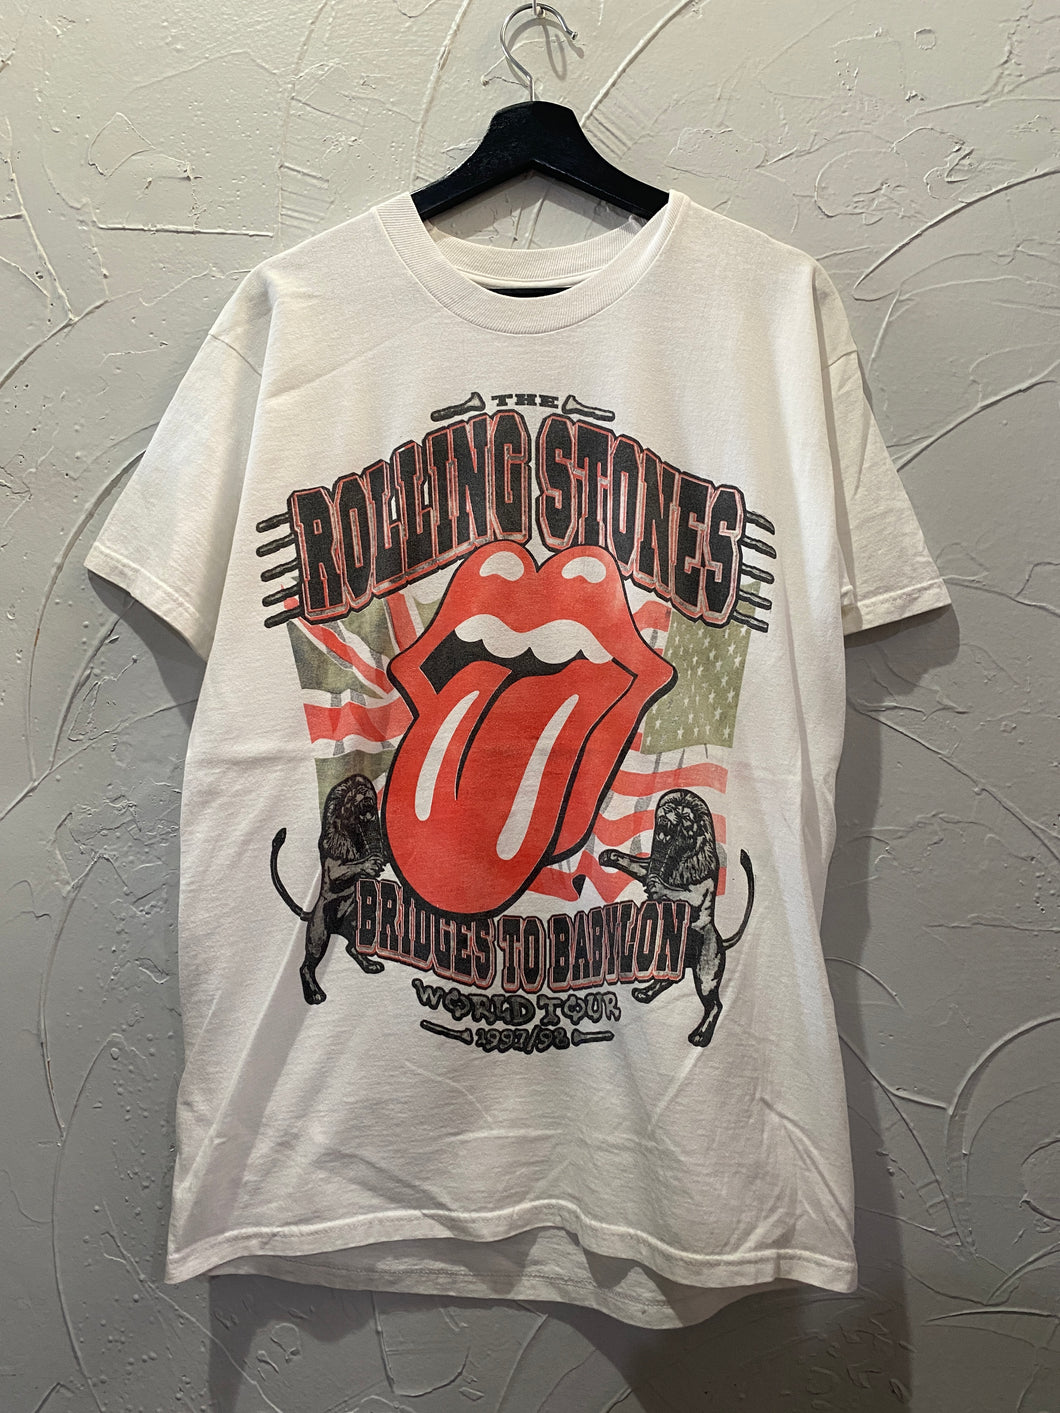 1997/98 The Rolling Stones Bridges To Babylon Tour TShirt